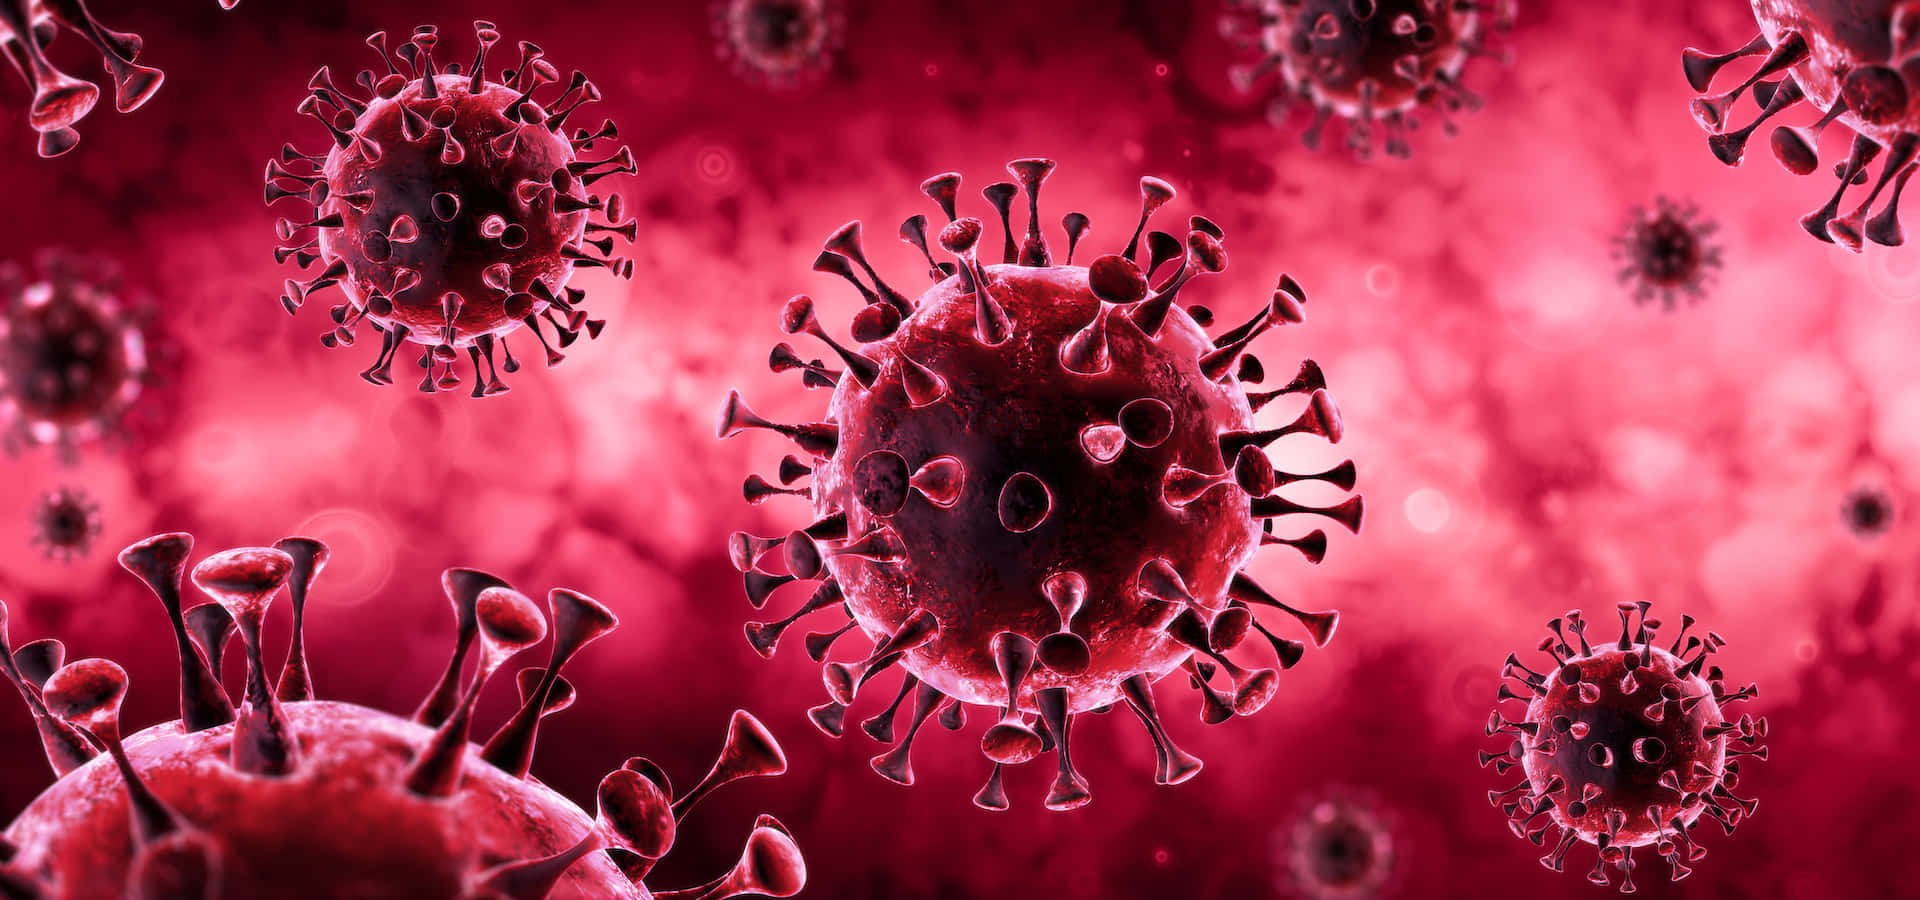 Caption: Coronavirus Pandemic Illustrated